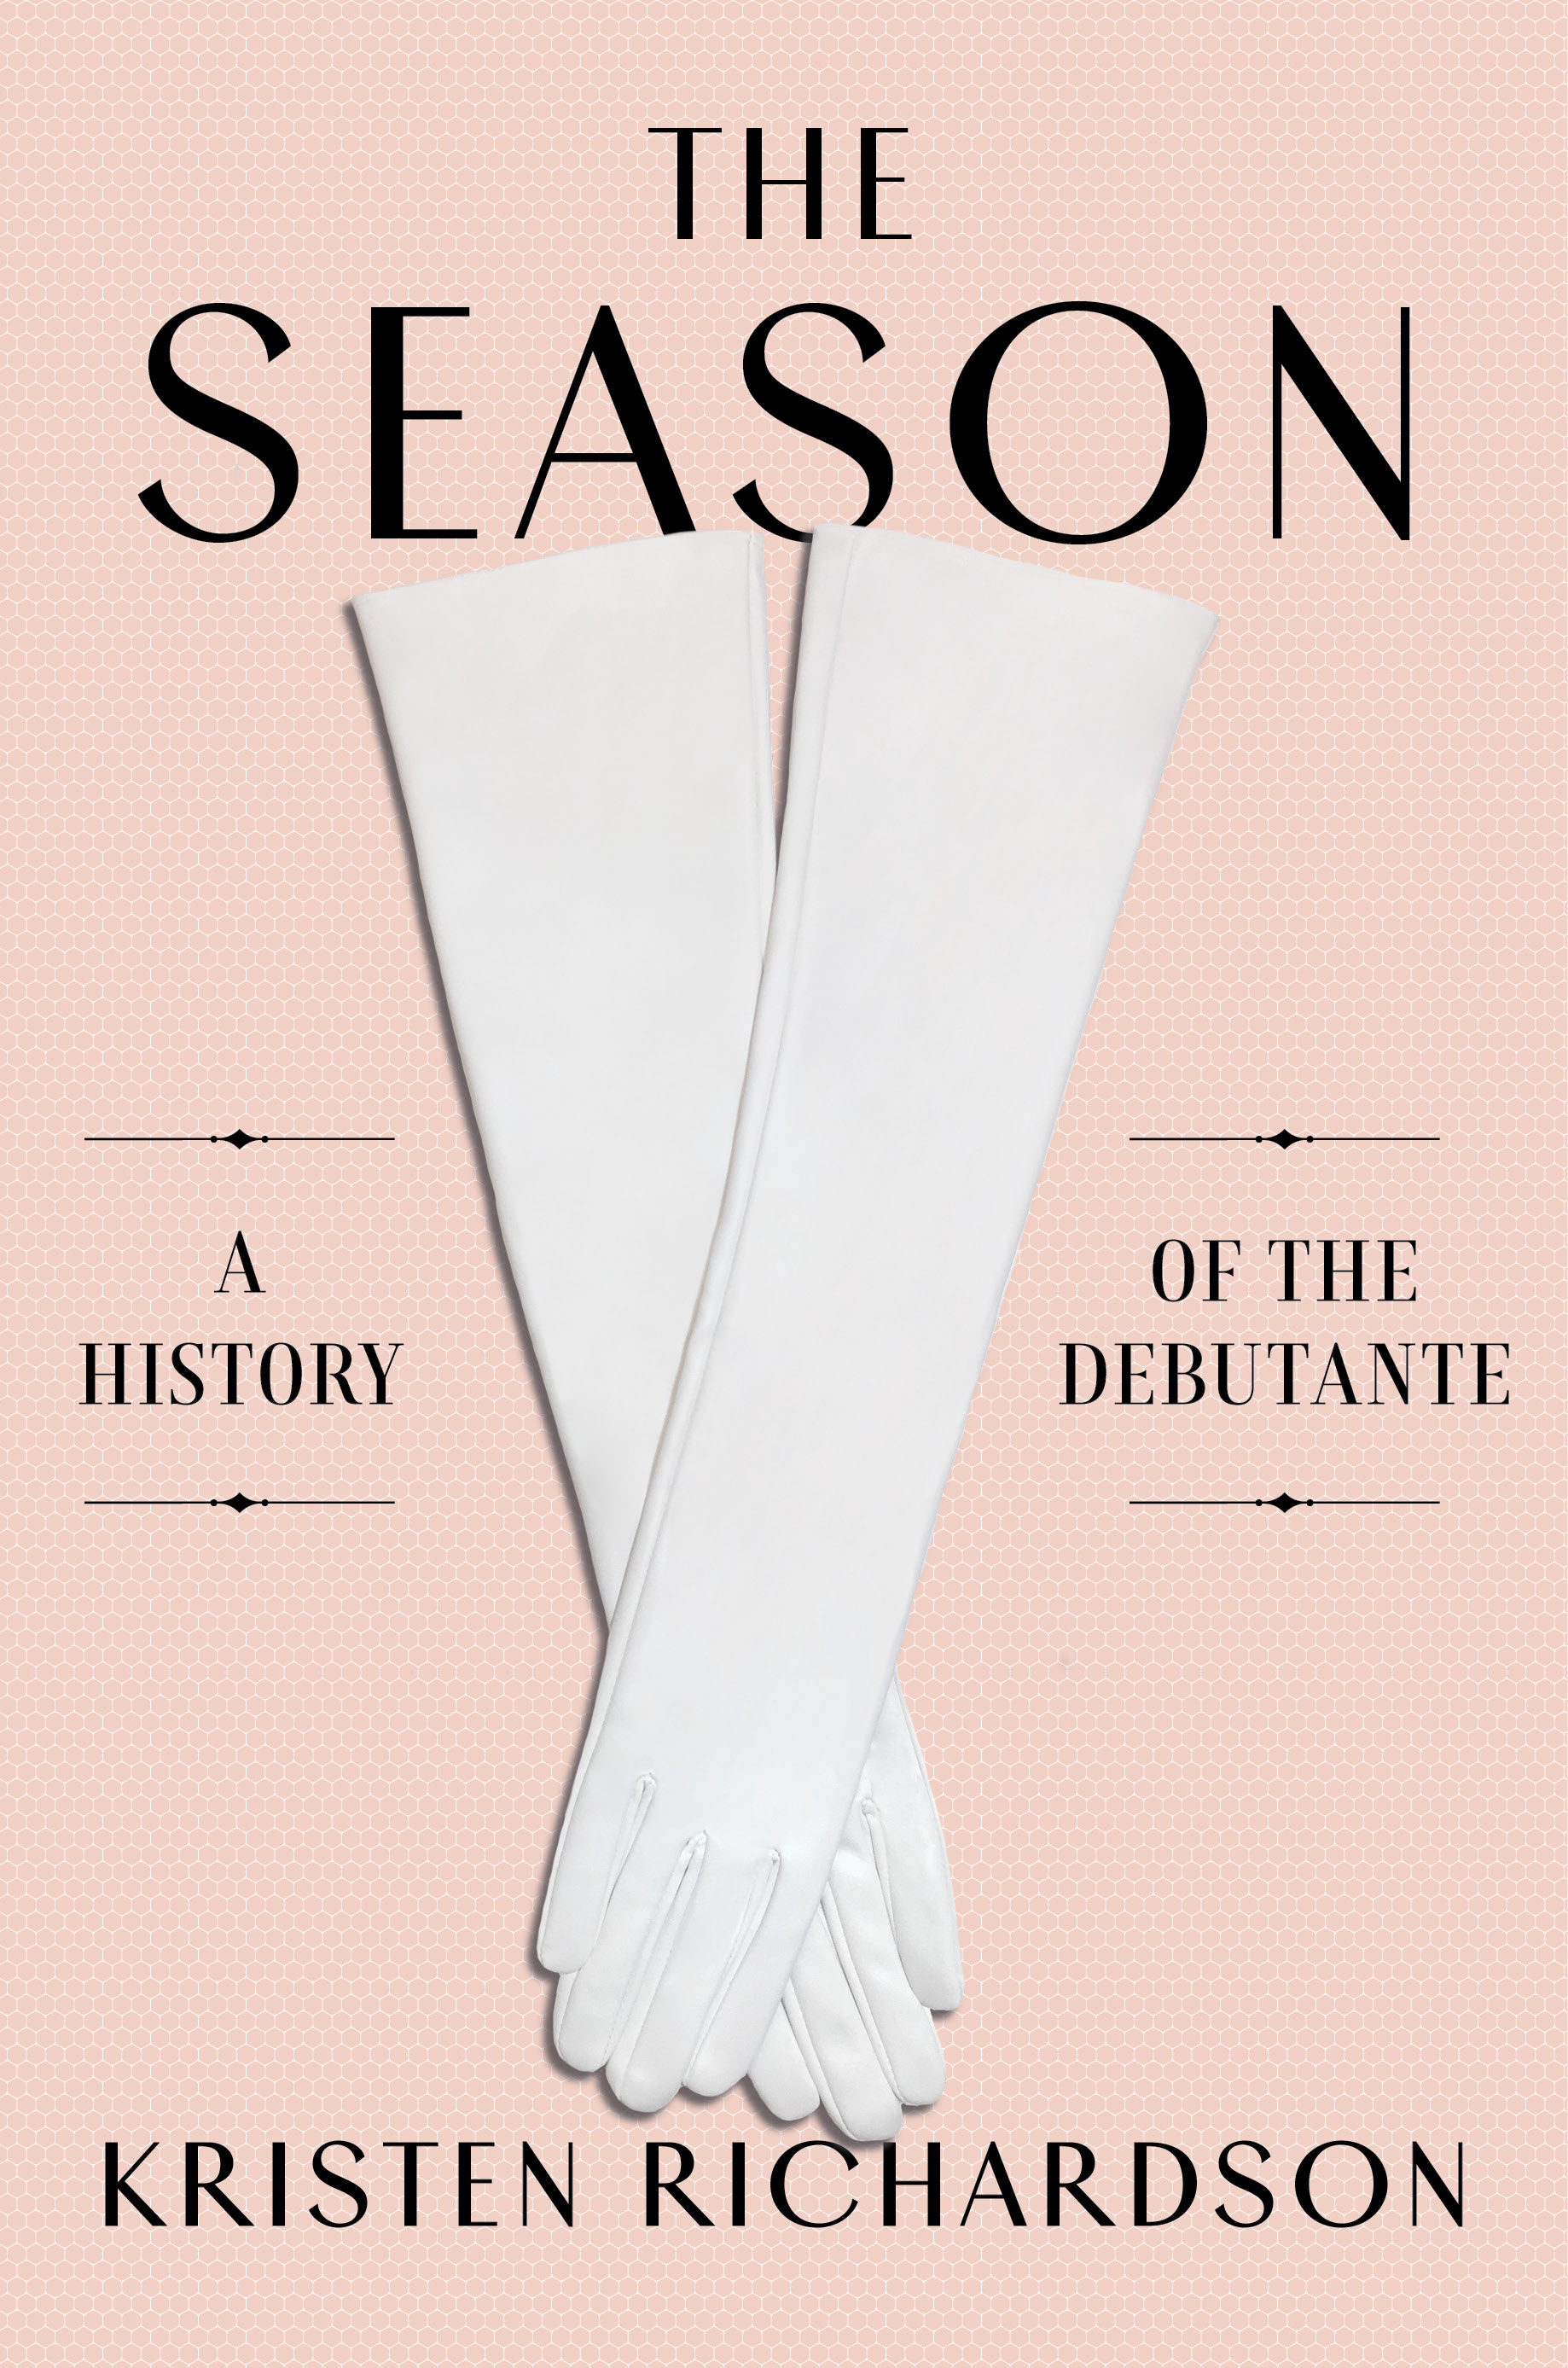 Book Launch: The Season by Kristen Richardson in conversation with Angela Serratore